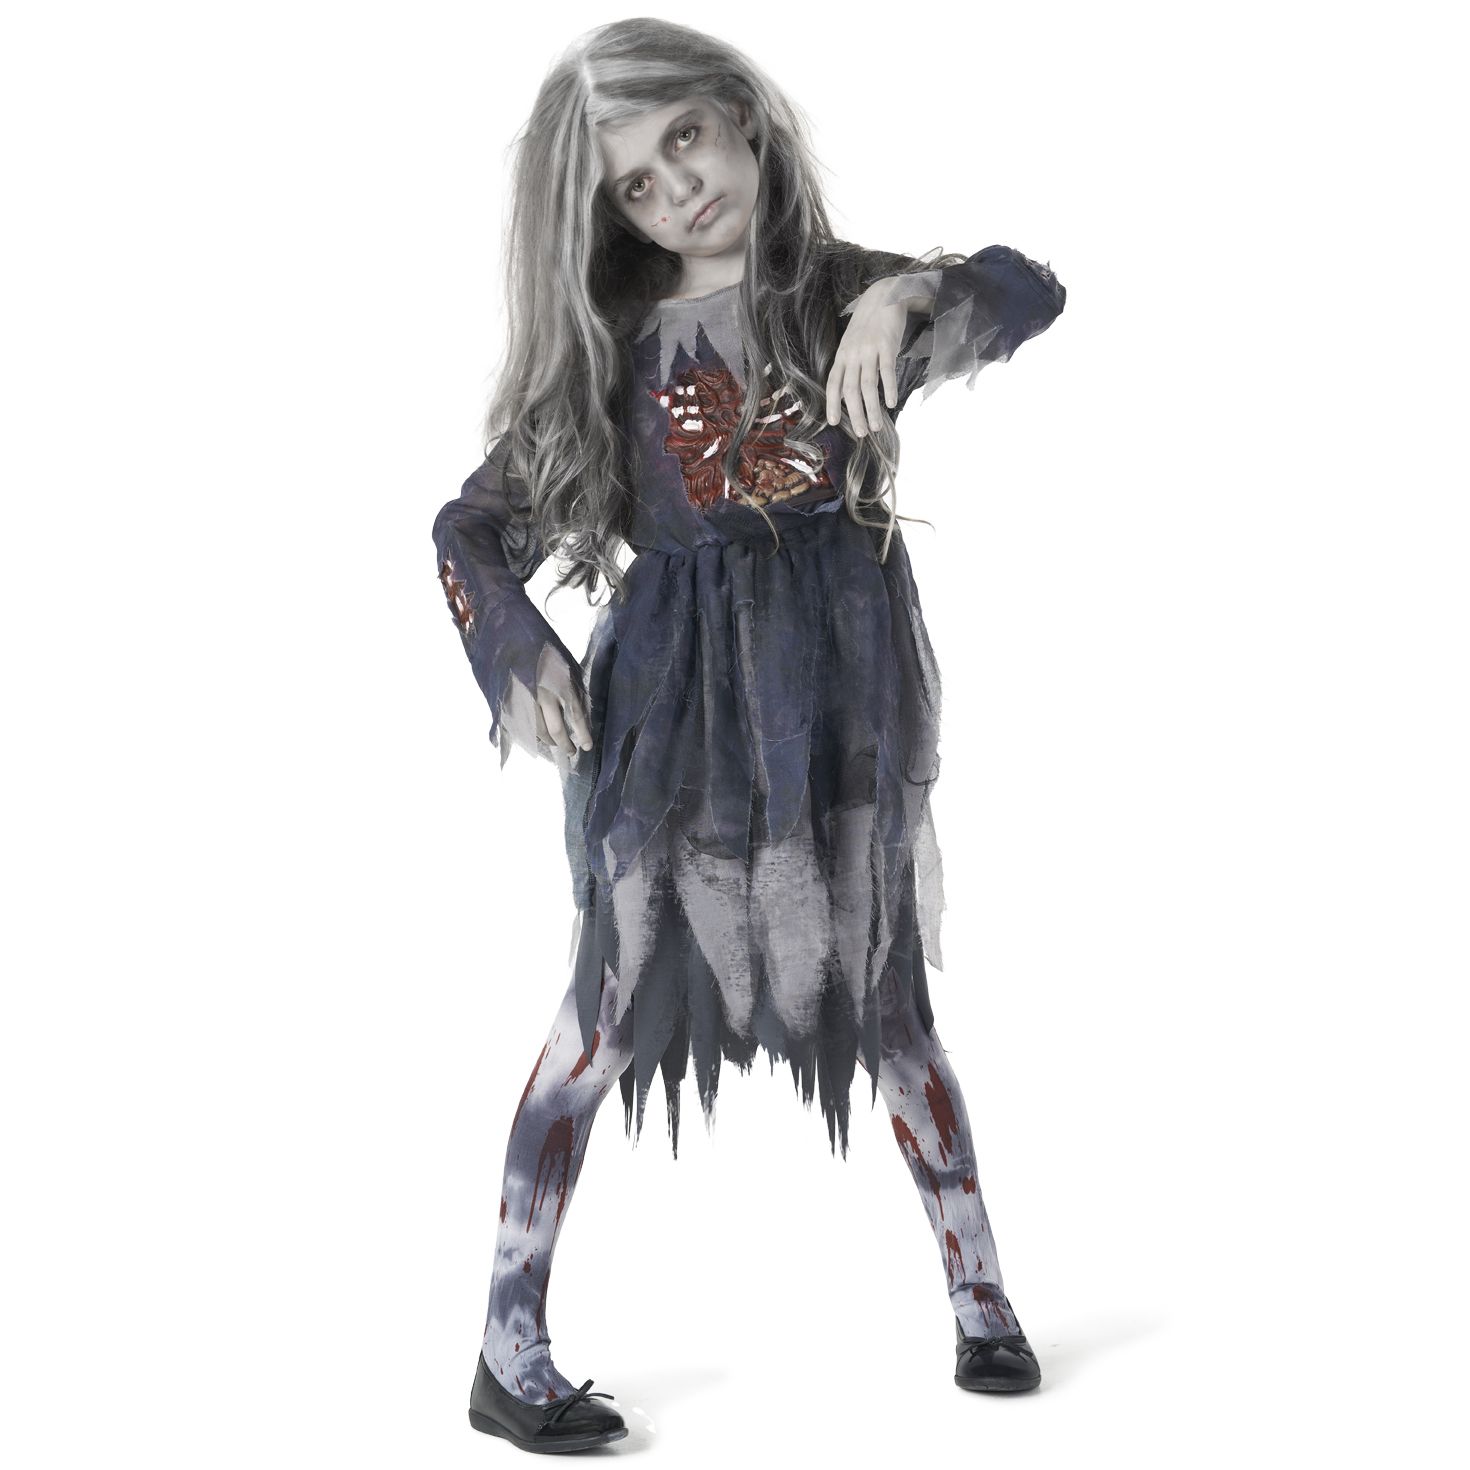 Morph Girls Zombie Costume Kids Undead Scary Halloween Fancy Dress Costume Halloween Orange M - image 1 of 5